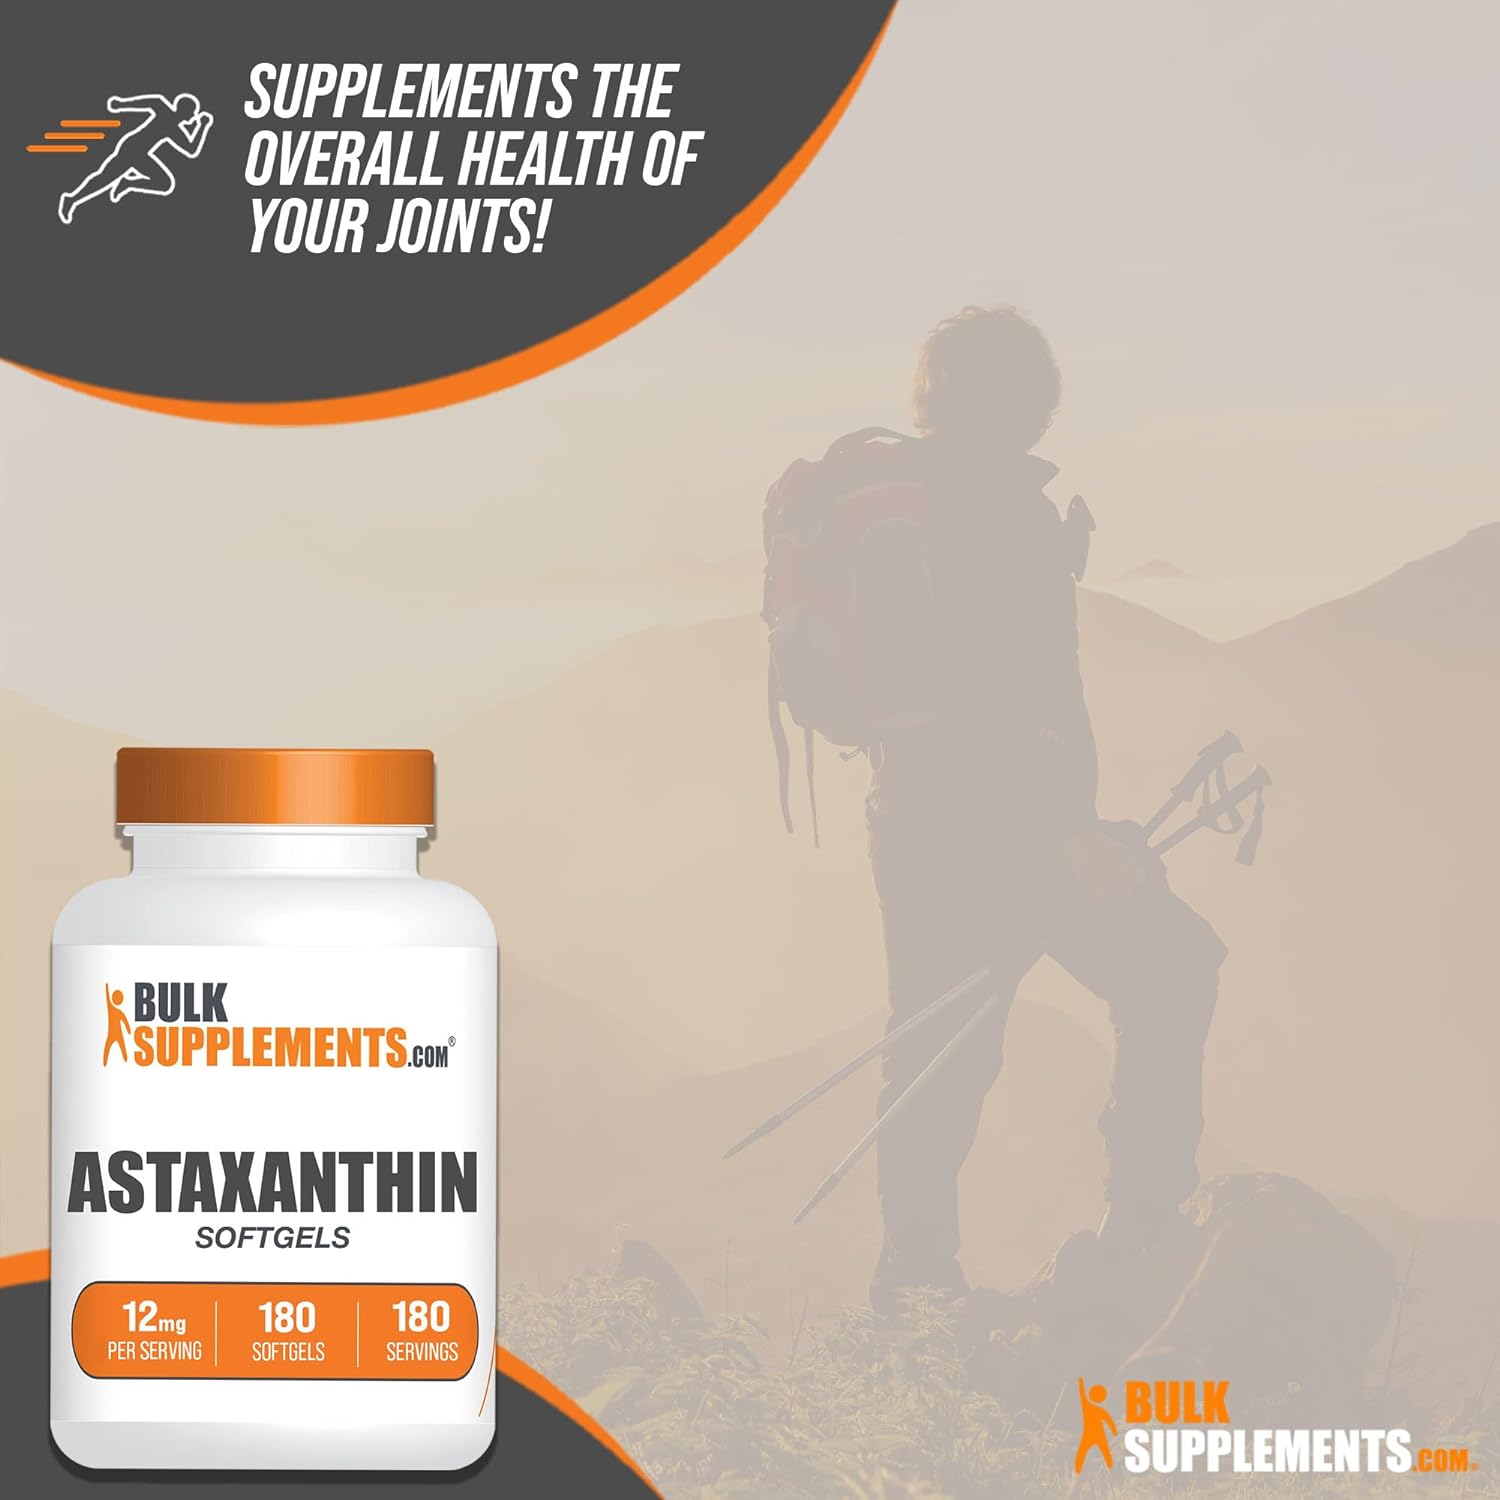 BULKSUPPLEMENTS.COM Astaxanthin 12mg 180 Softgels - Astaxanthin Supplement - Astaxanthin Pills - Antioxidants Supplement - Eye Supplements - 1 Astaxanthin Softgel per Serving (180 Softgels) : Health & Household